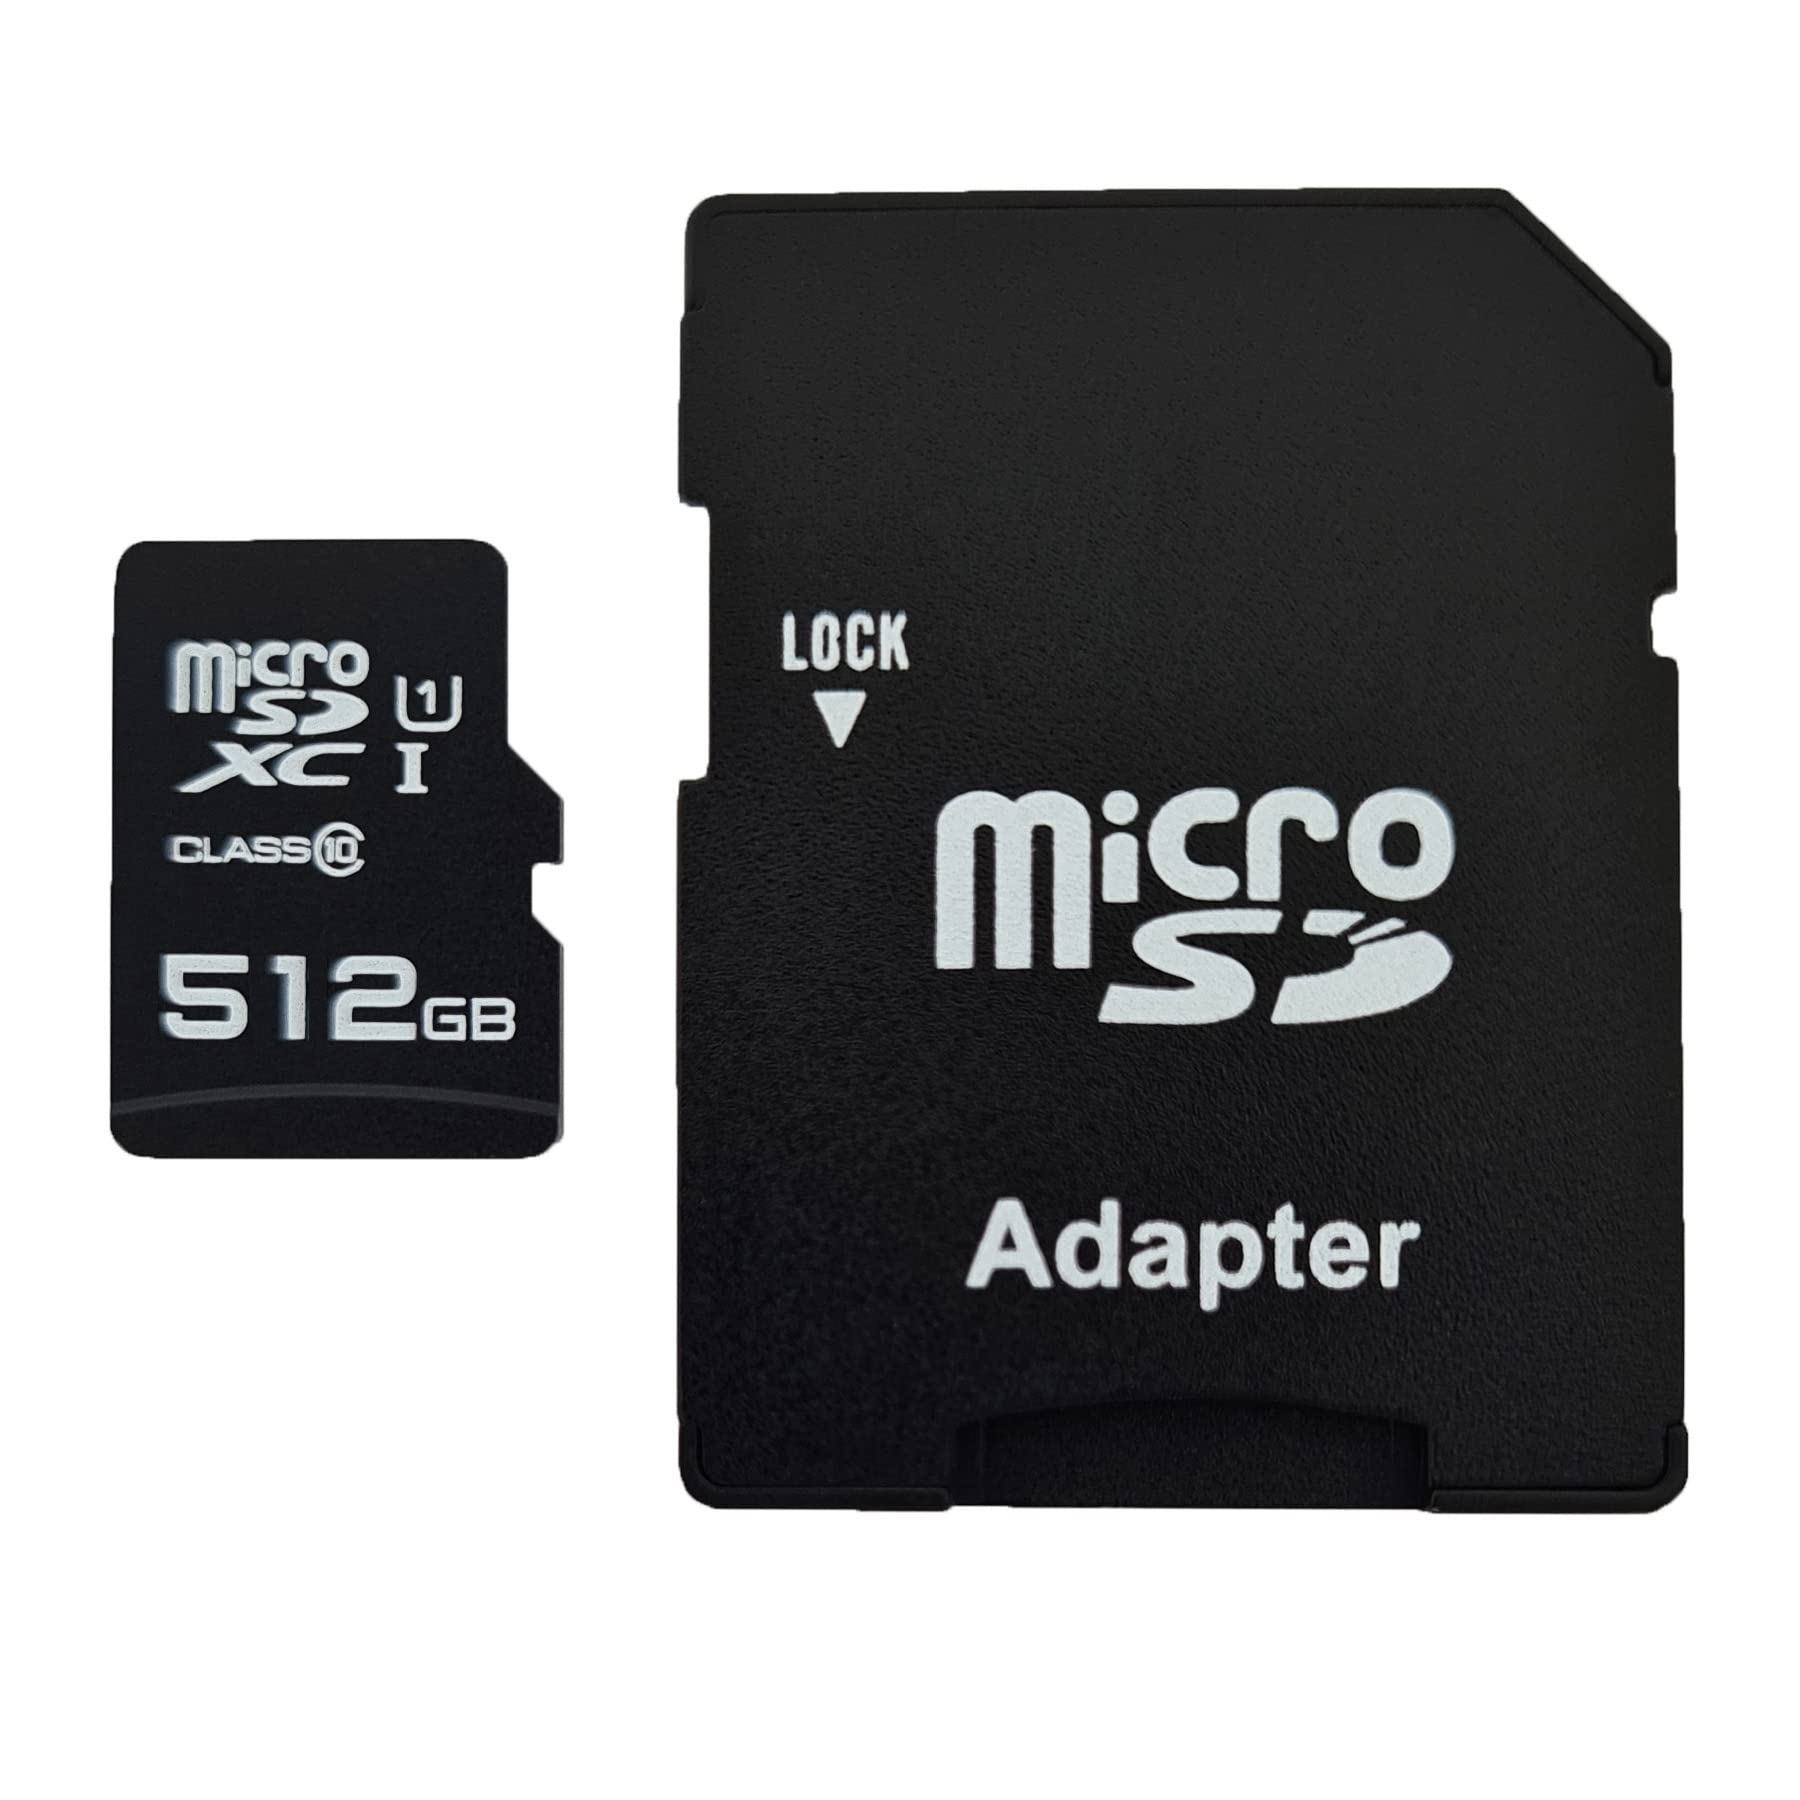 dekoelektropunktde 512GB MicroSDXC Speicherkarte mit Adapter class 10 kompatibel für Nextbase 112, 212, 312GW, 412GW, 512GW, Ride, Duo HD & Nextbase Mirror, Apeman, Aukey, Toguard Dash Cam Dashcam DVR